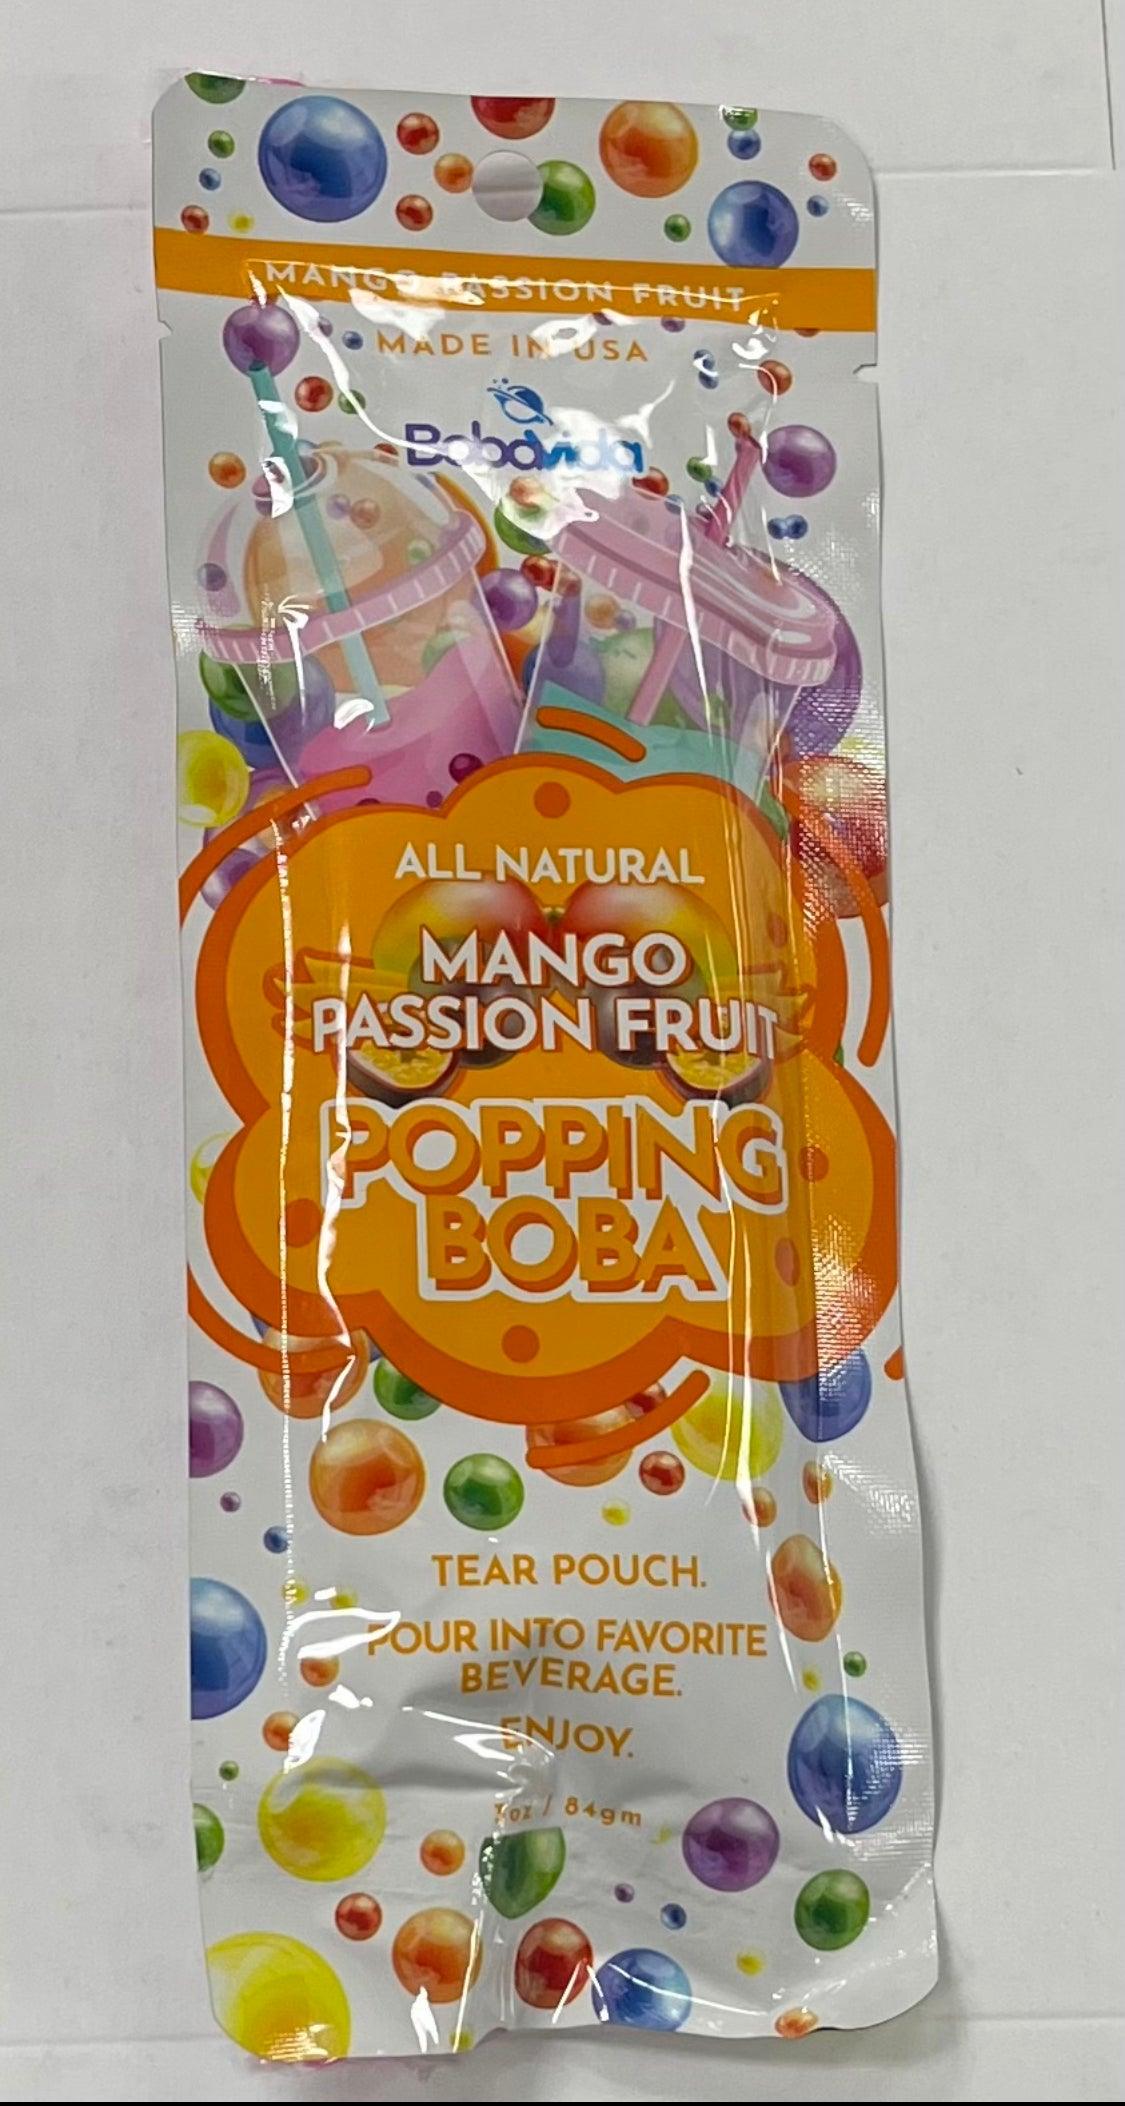 BobaVida Mango Passion Fruit Popping Boba Pouch (84g) - Extreme Snacks